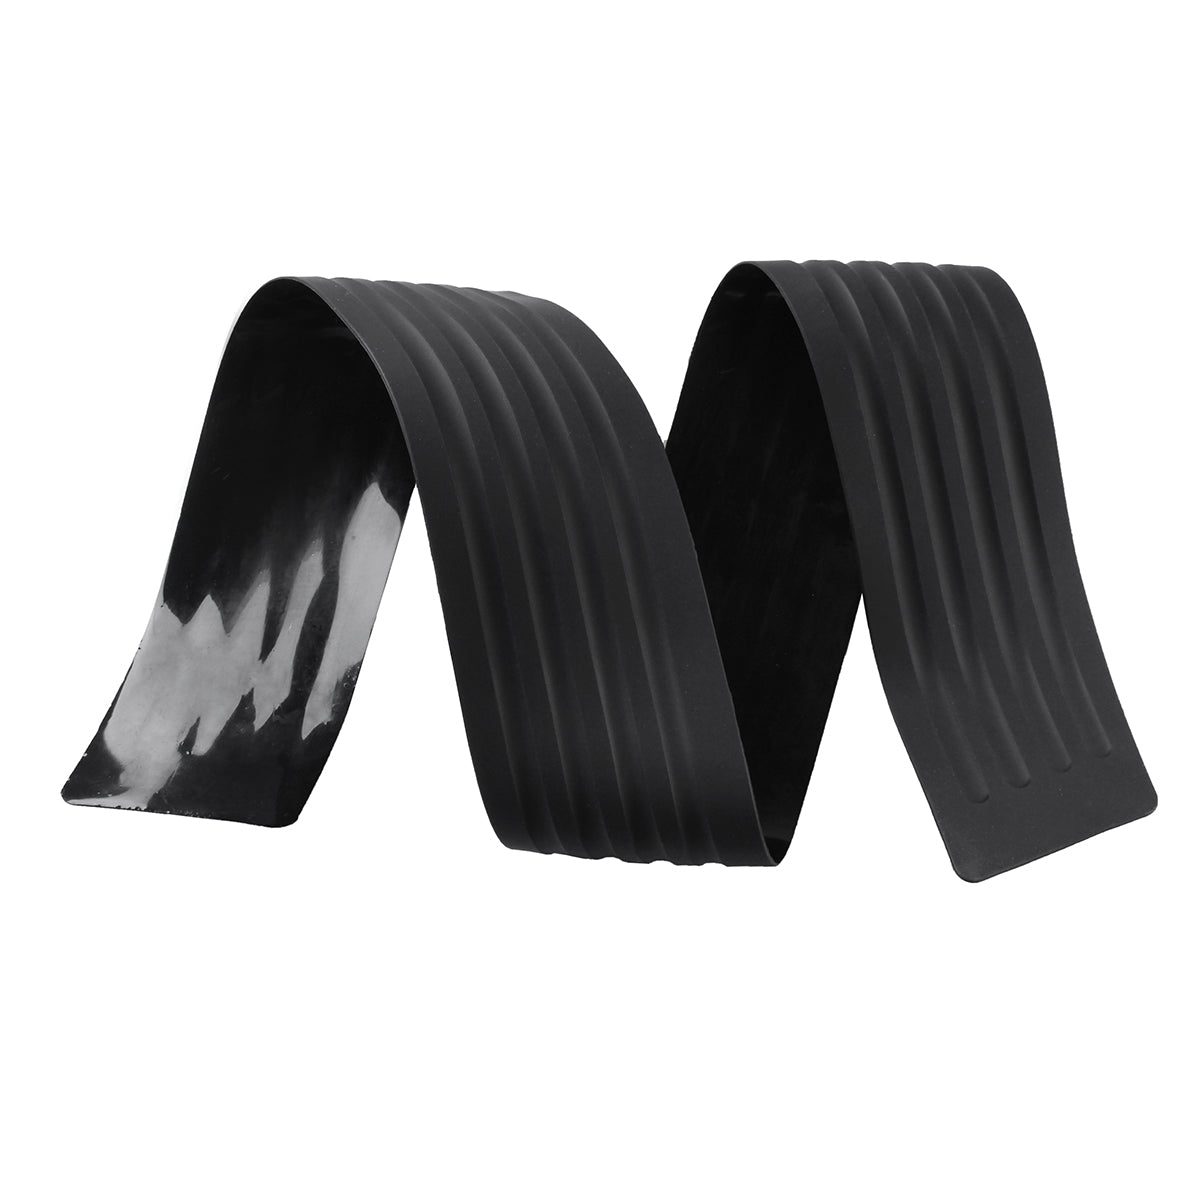 104cm PVC Rubber Rear Bumper Sill Protector Plate Cover Guard Pad Moulding for VW/Audi/BMW SUV - Auto GoShop